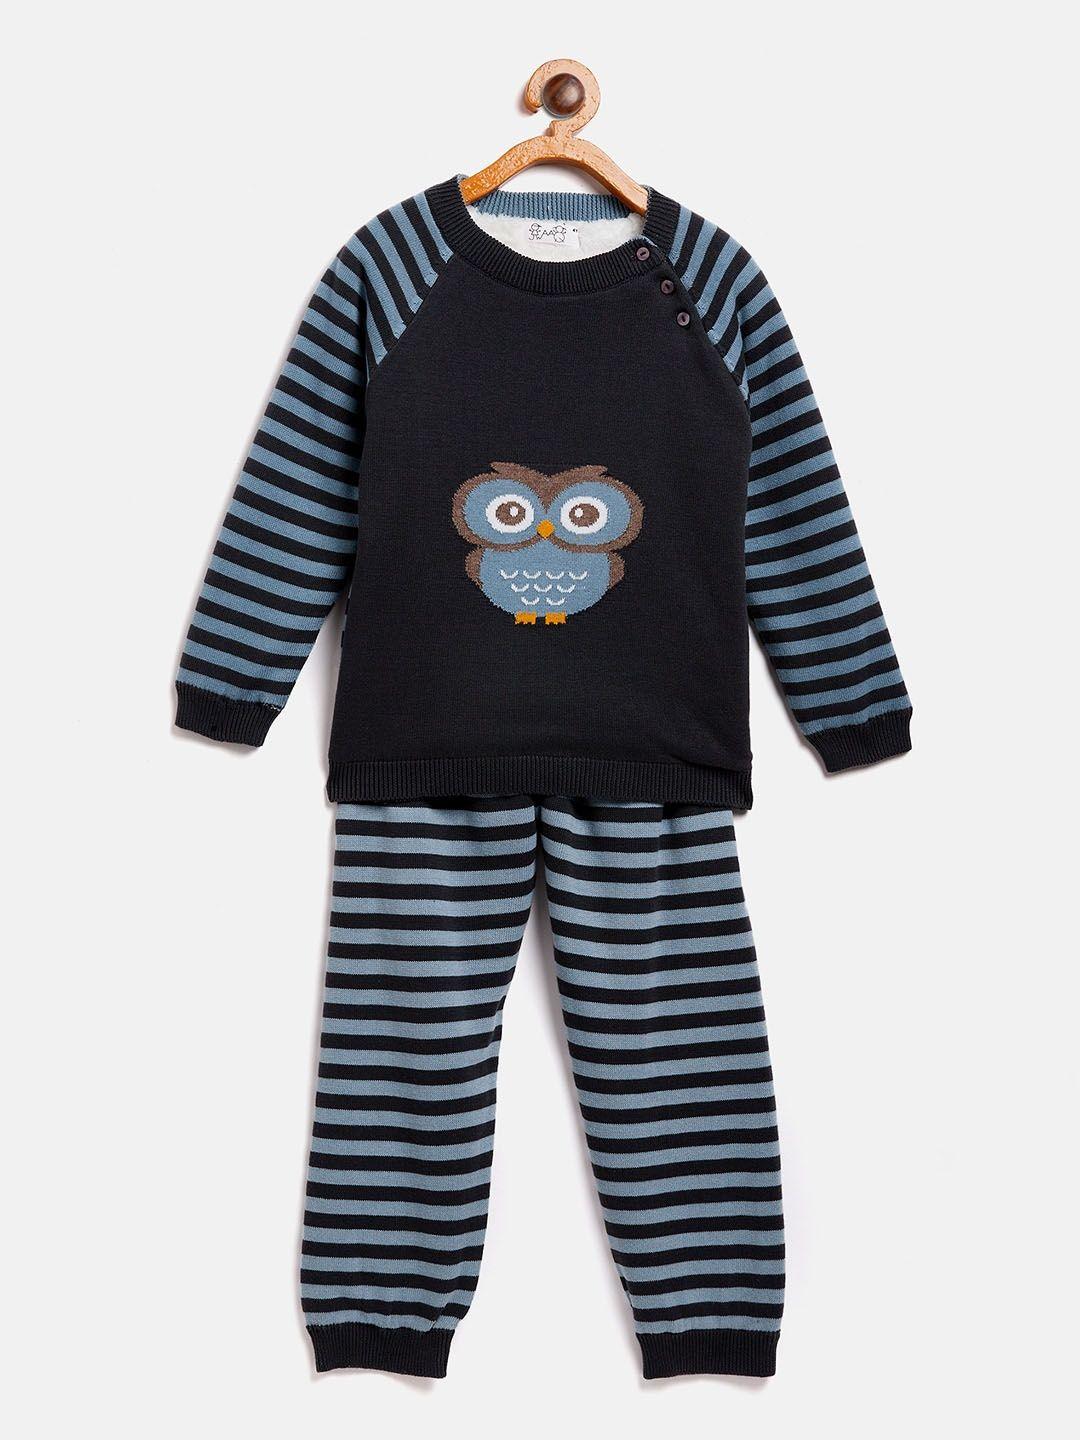 jwaaq kids navy blue & black striped pure cotton top with pyjamas